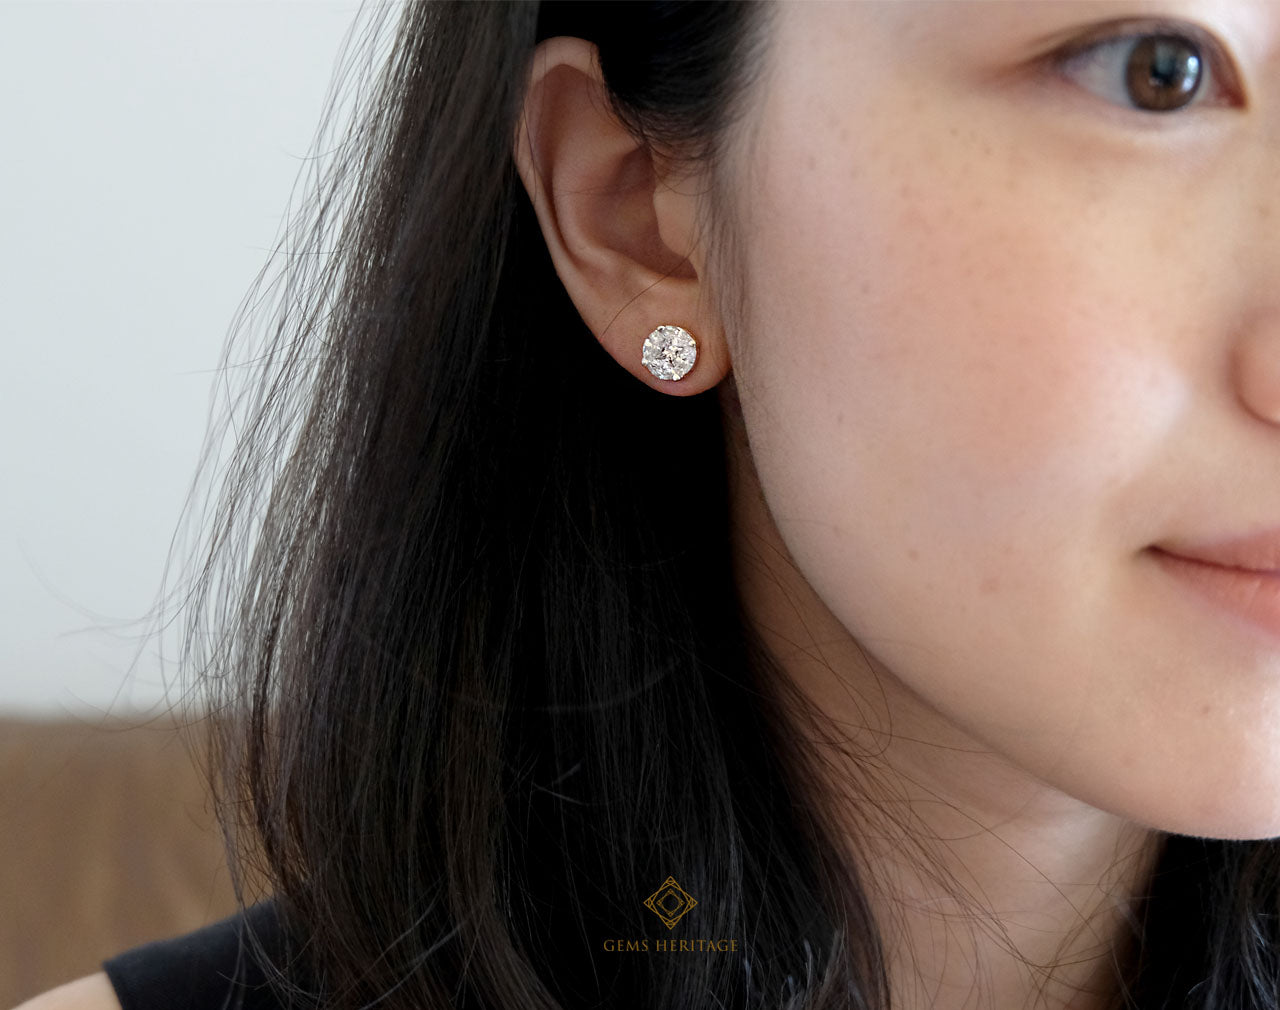 2.5 cts face illusion setting  diamond earrings